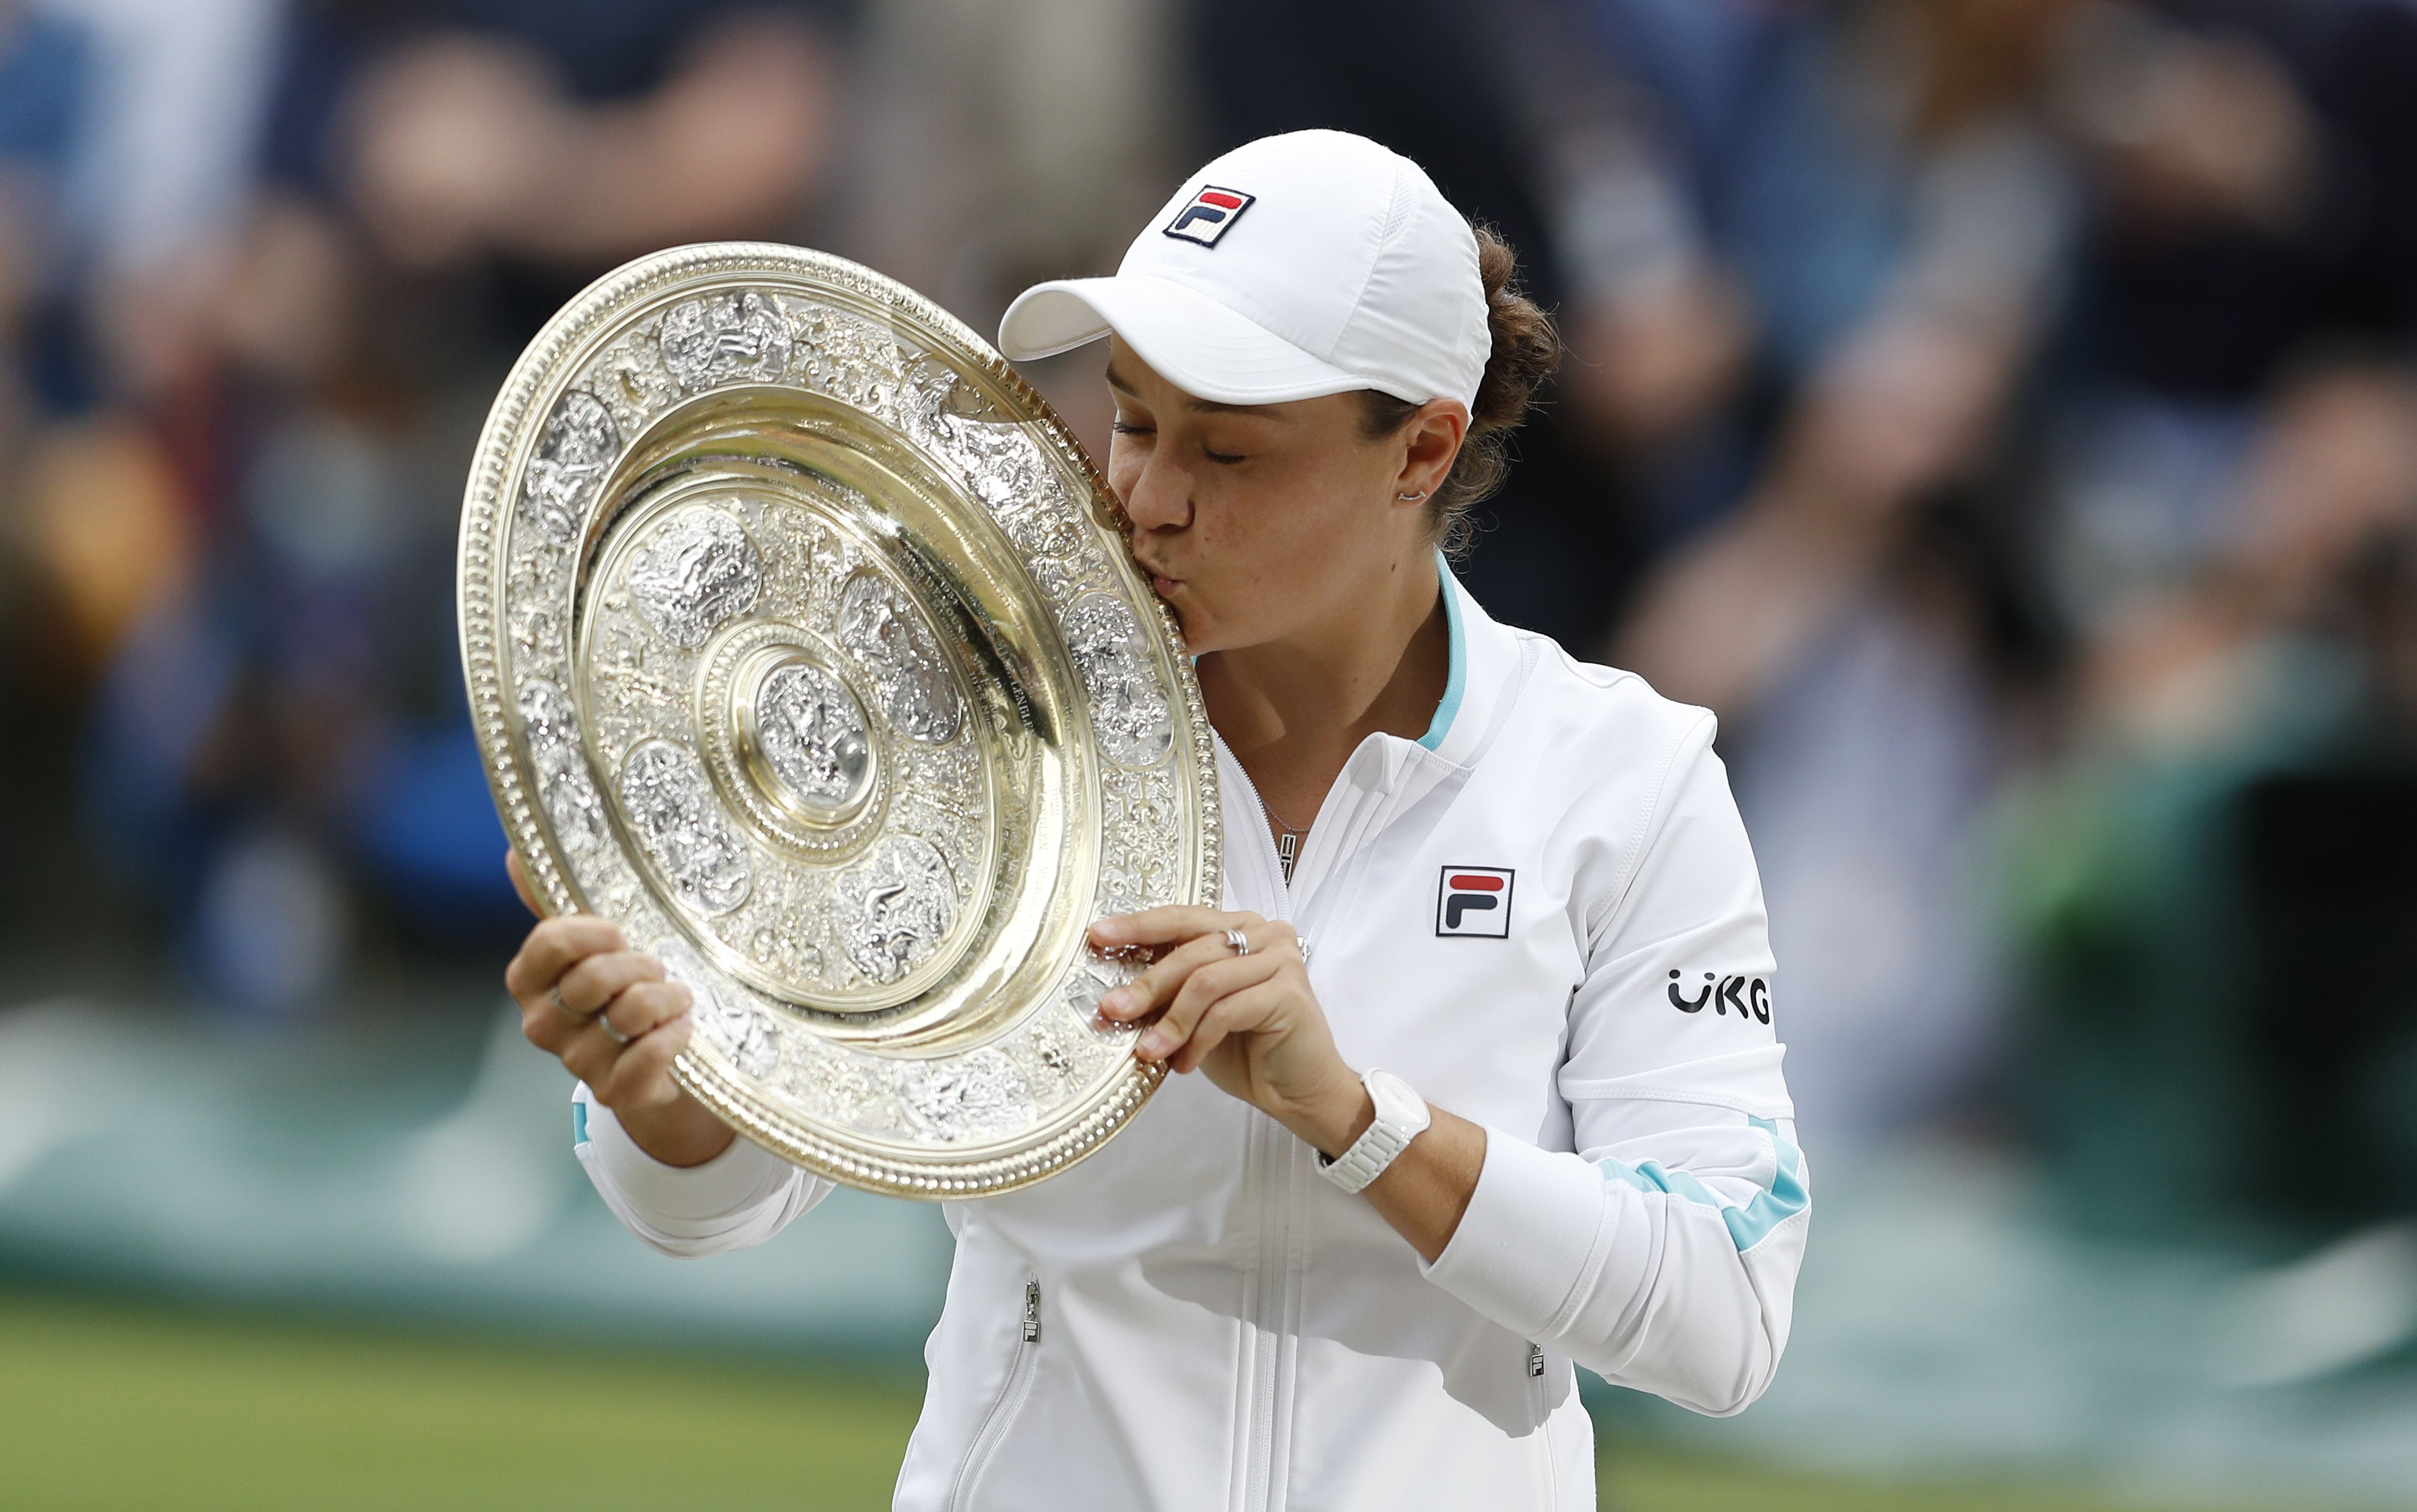 Wimbledon 2021: Barty wins second Grand Slam title after beating Pliskova  in final